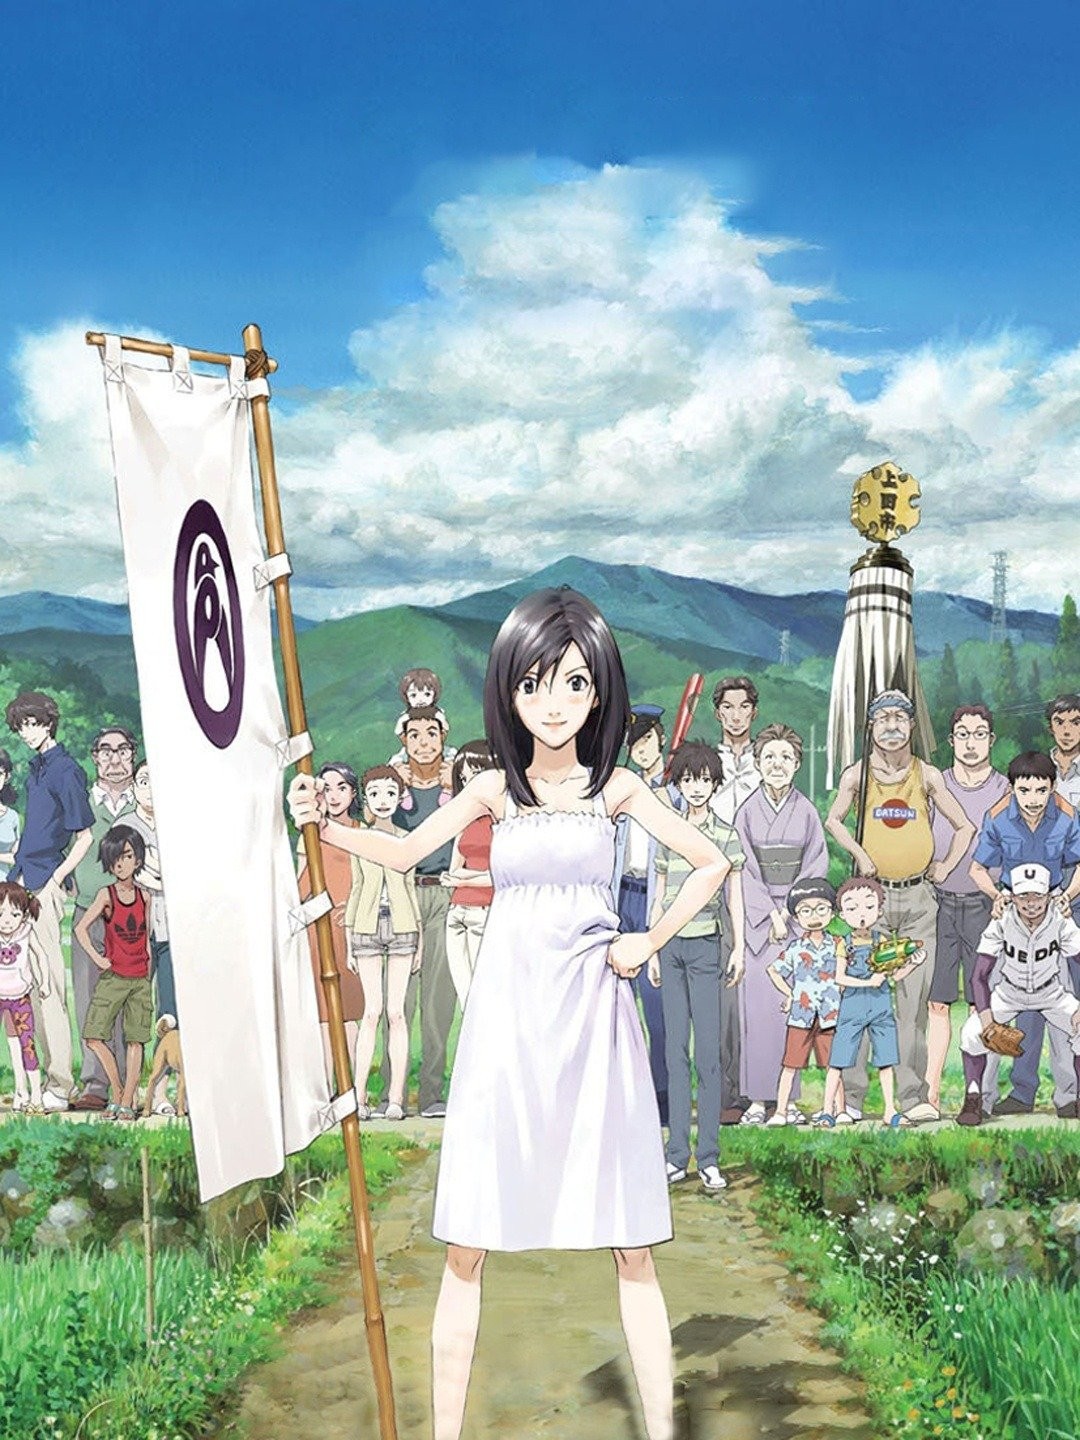 Expired CJS Icons of Anime Film Series  Summer Wars Sama Wozu   Happening  Michigan